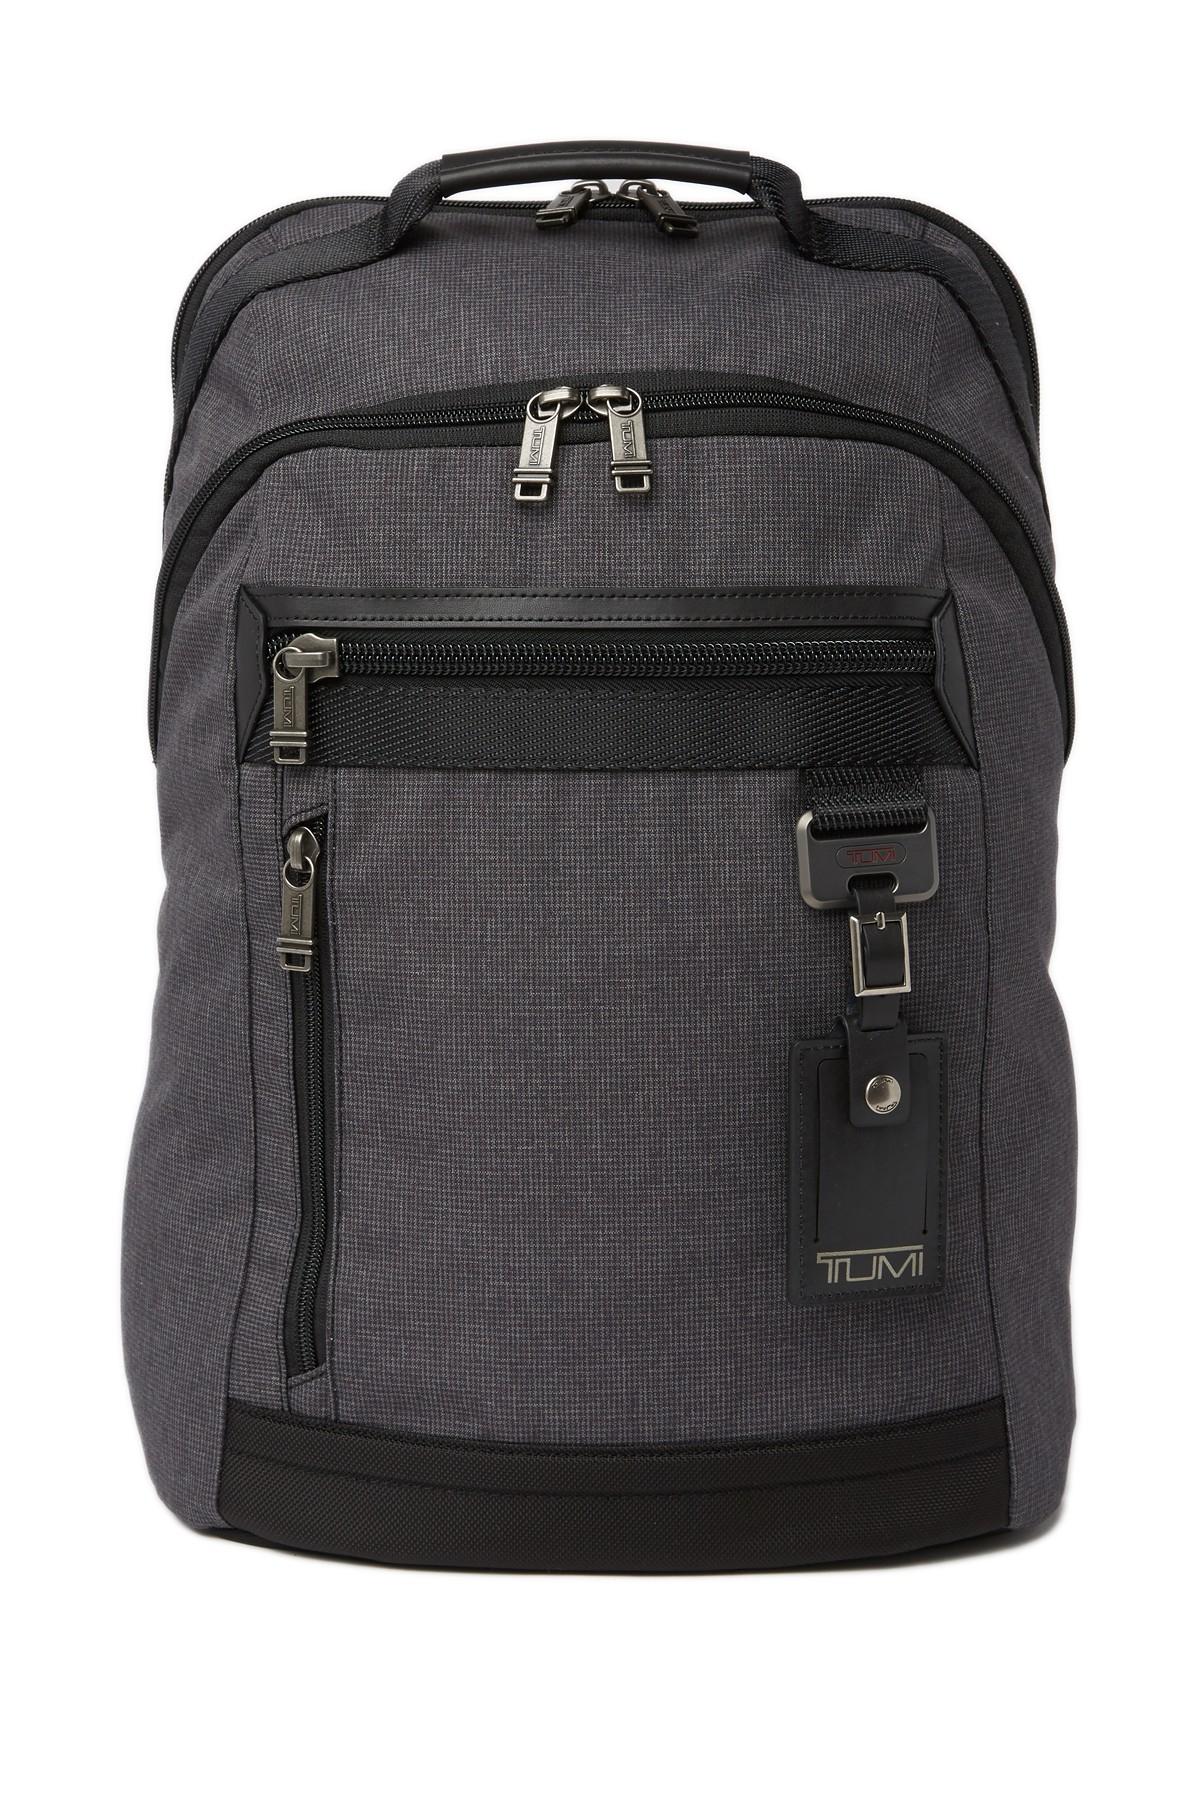 Tumi Synthetic Bertona Backpack in Heather Grey (Gray) for Men - Save ...